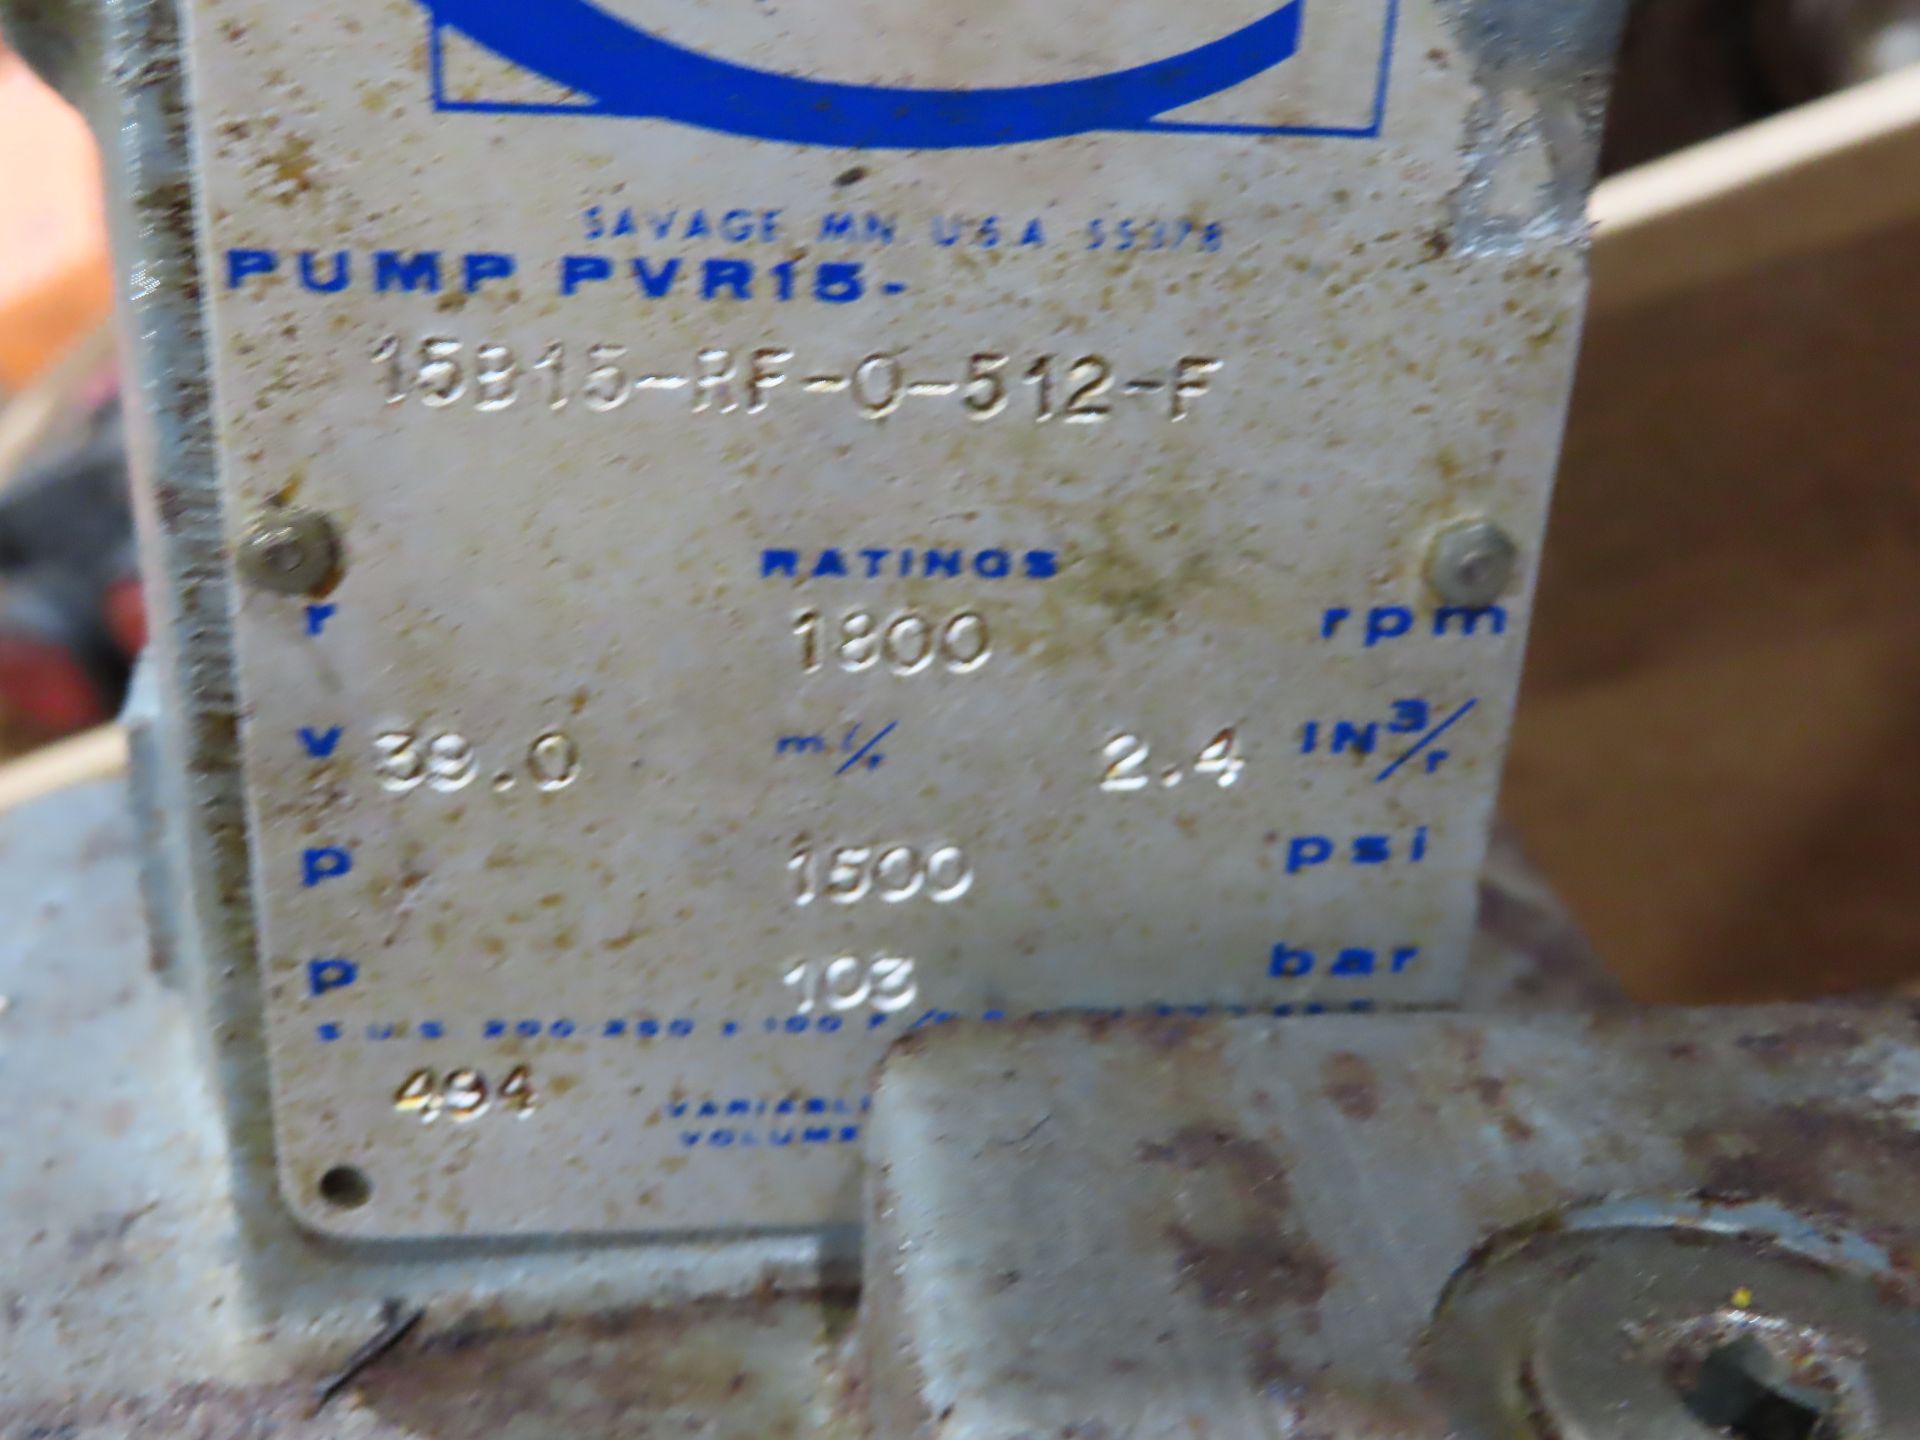 Continental Hydraulics pump model 15B15-RF-0-512-F, used parts crib spare, as always with Brolyn LLC - Image 2 of 2